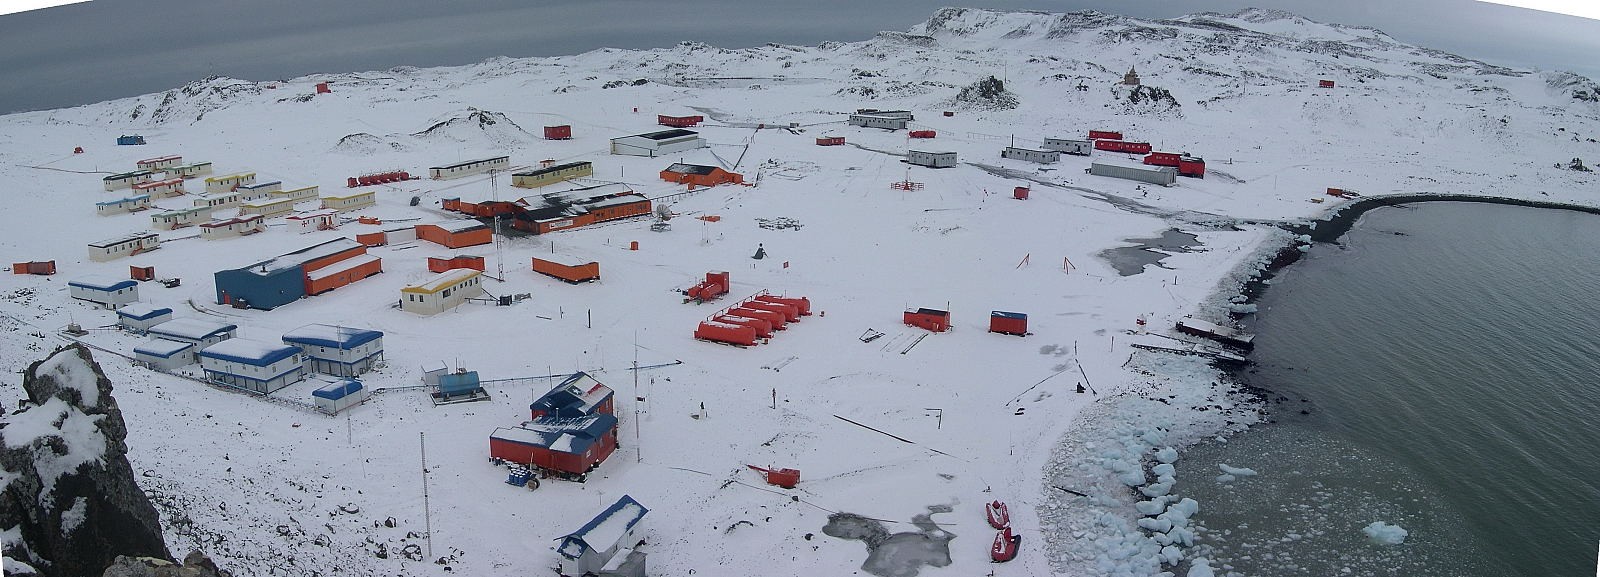 Vila na Antártida com bases para cientistas (Foto: Wikimedia Commons)